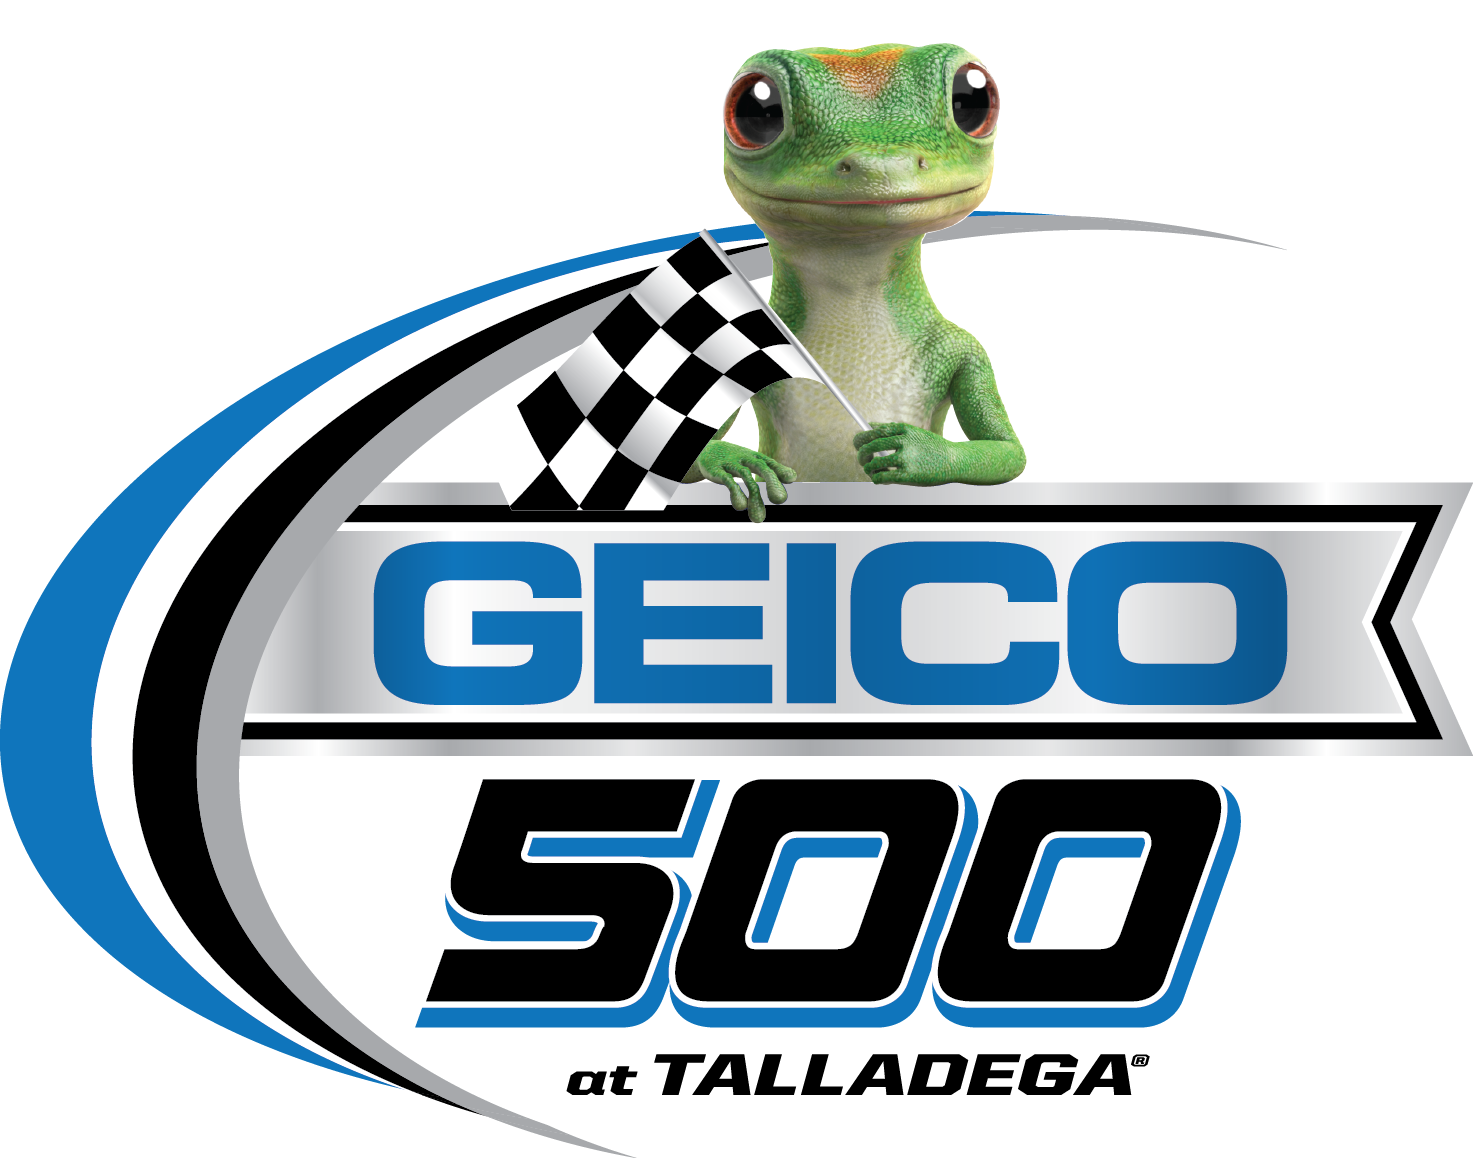 GEICO 500